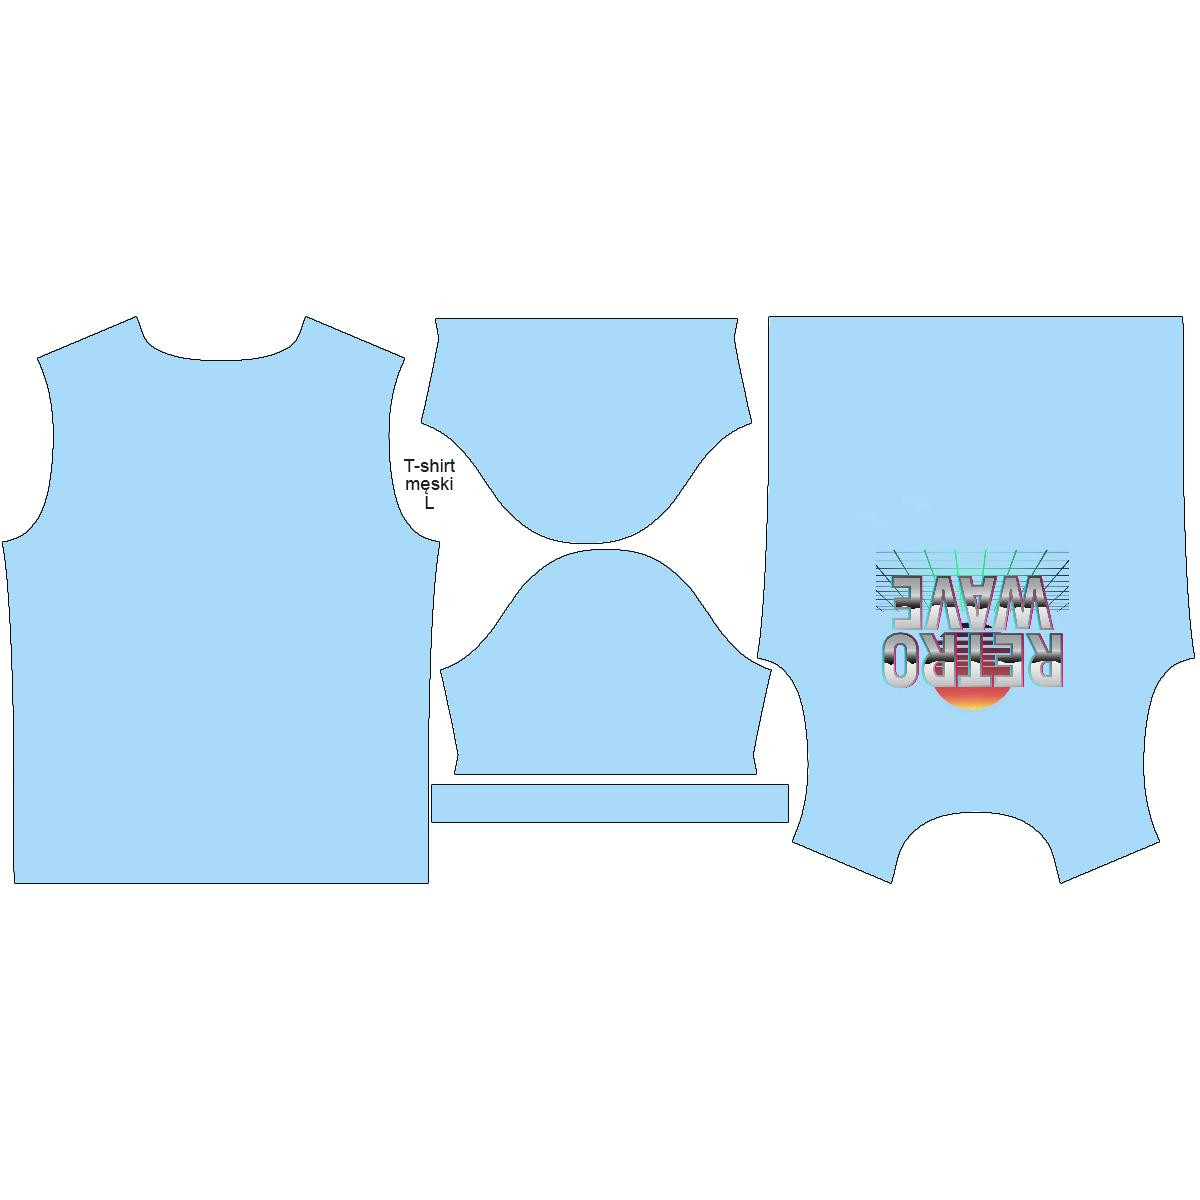 MEN’S T-SHIRT - RETRO WAVE / light blue - single jersey